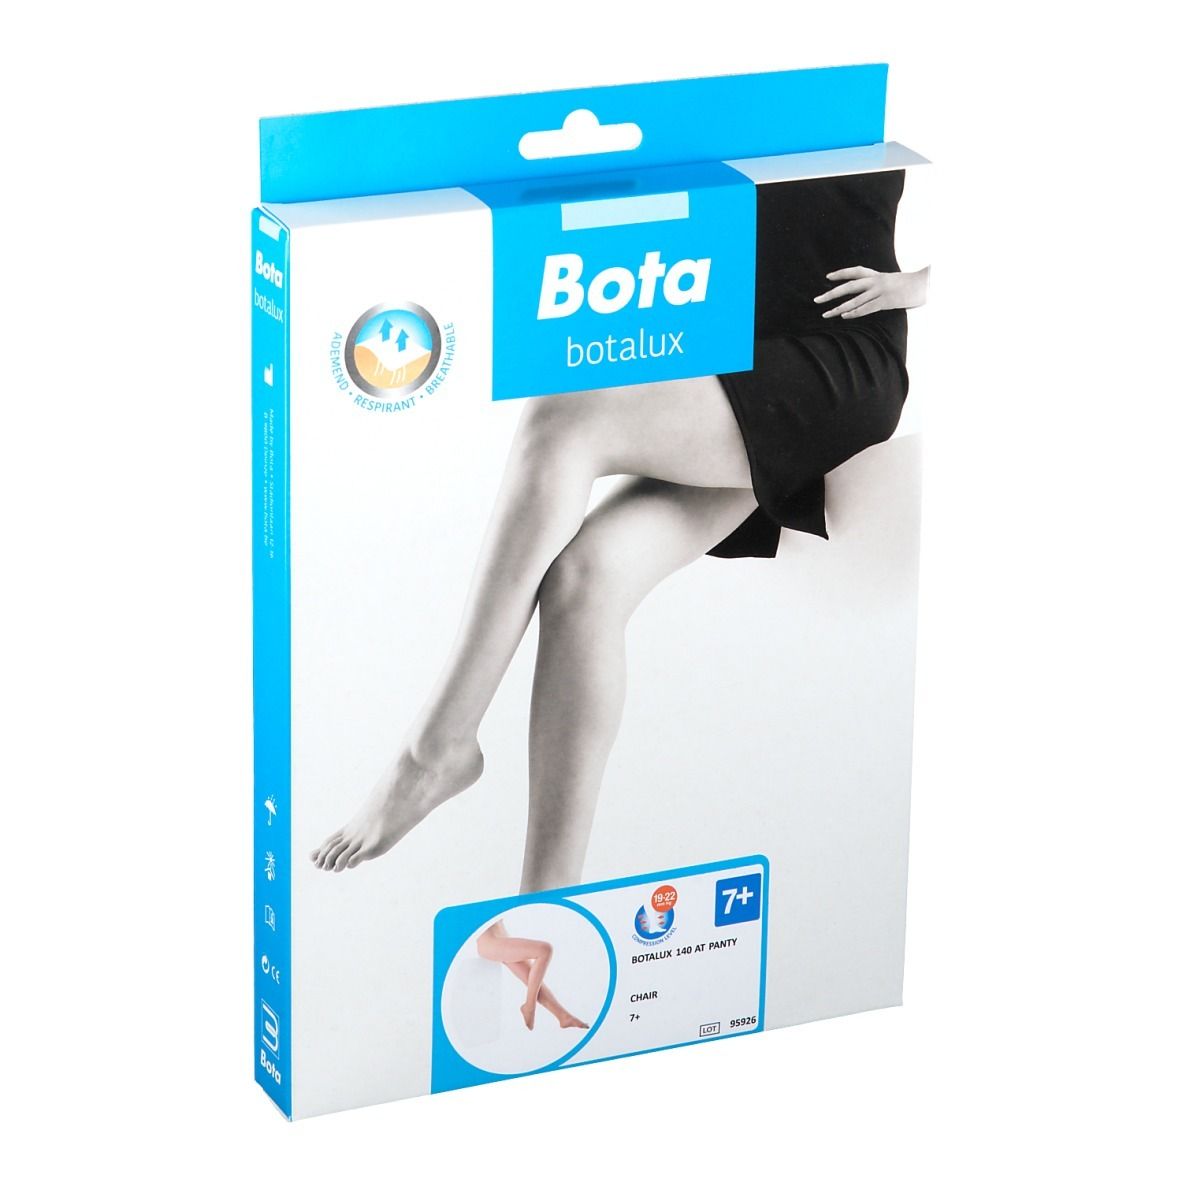 Image of Bota Botalux 140 AT Panty Chair Größe 7+